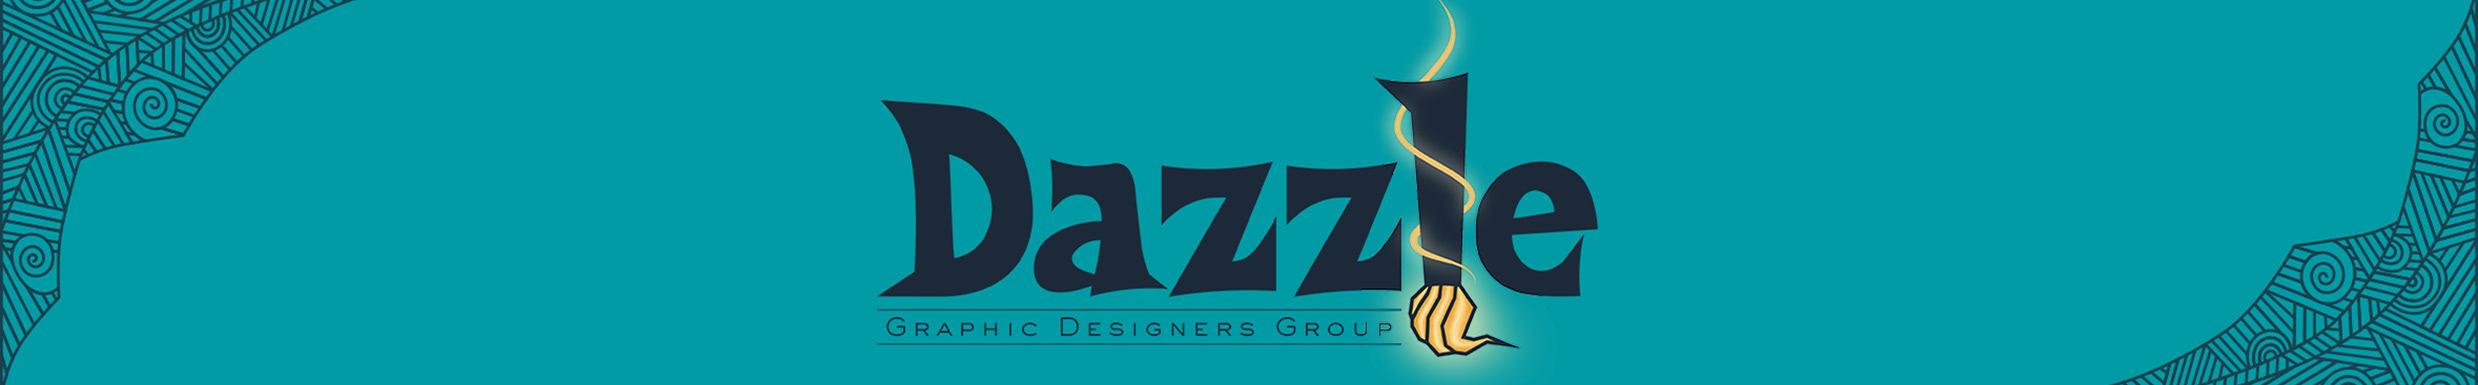 Banner de perfil de Dazzle Graphic